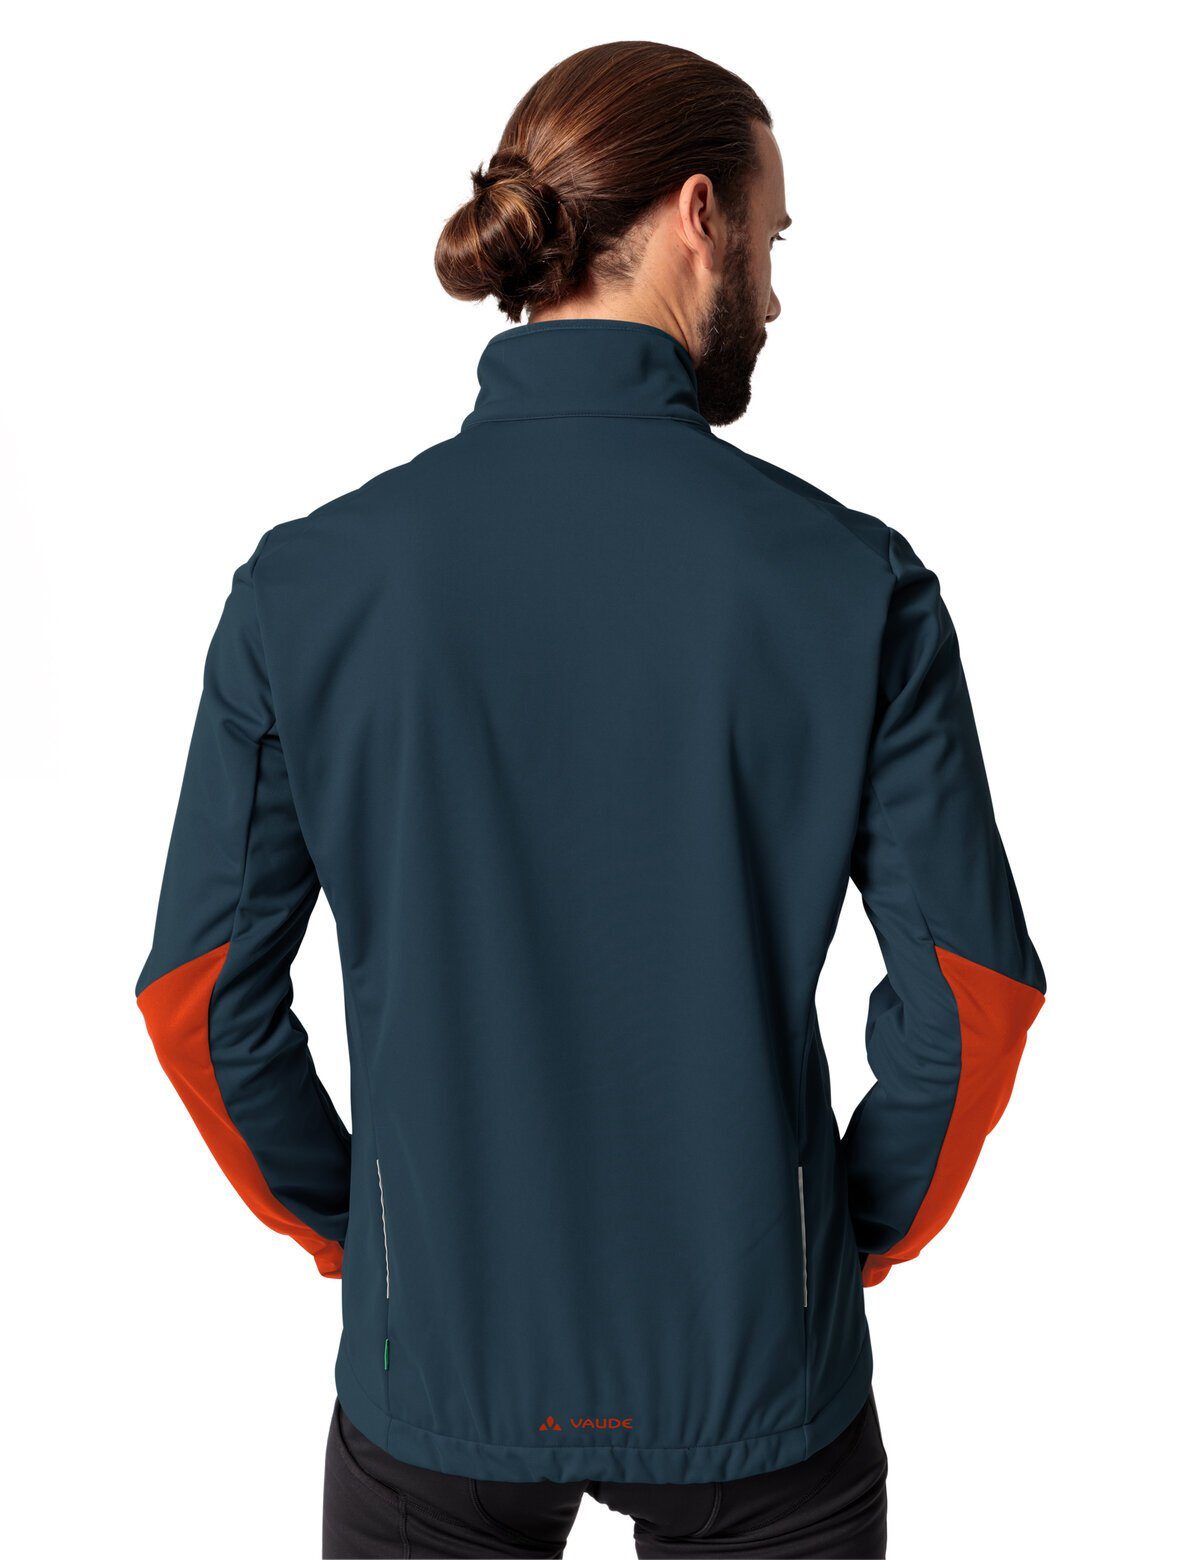 sea II (1-St) Matera VAUDE kompensiert Klimaneutral Men's Jacket Outdoorjacke Softshell dark